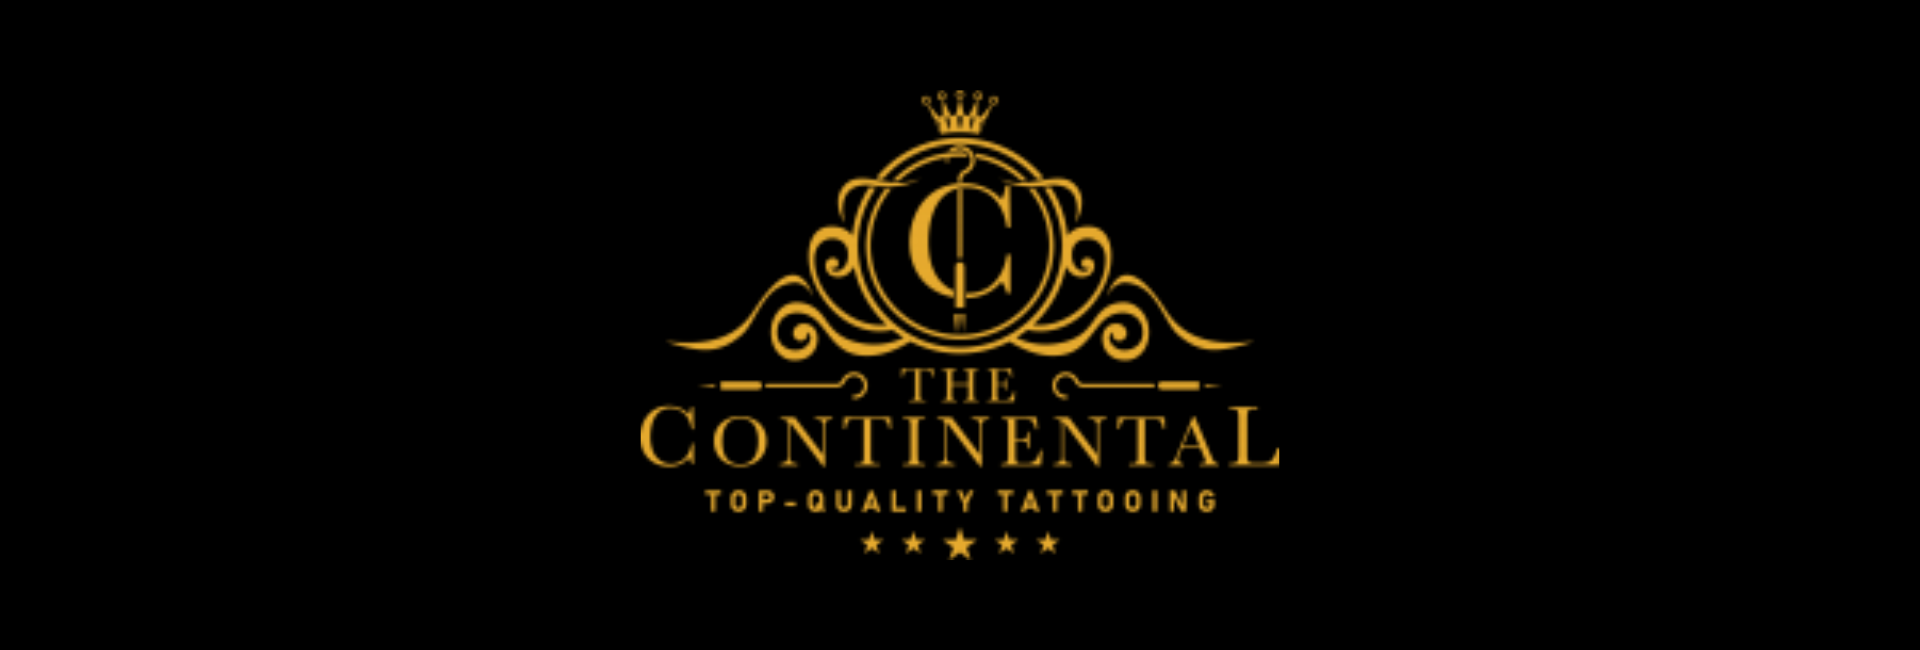 the-continental-tattoo-header